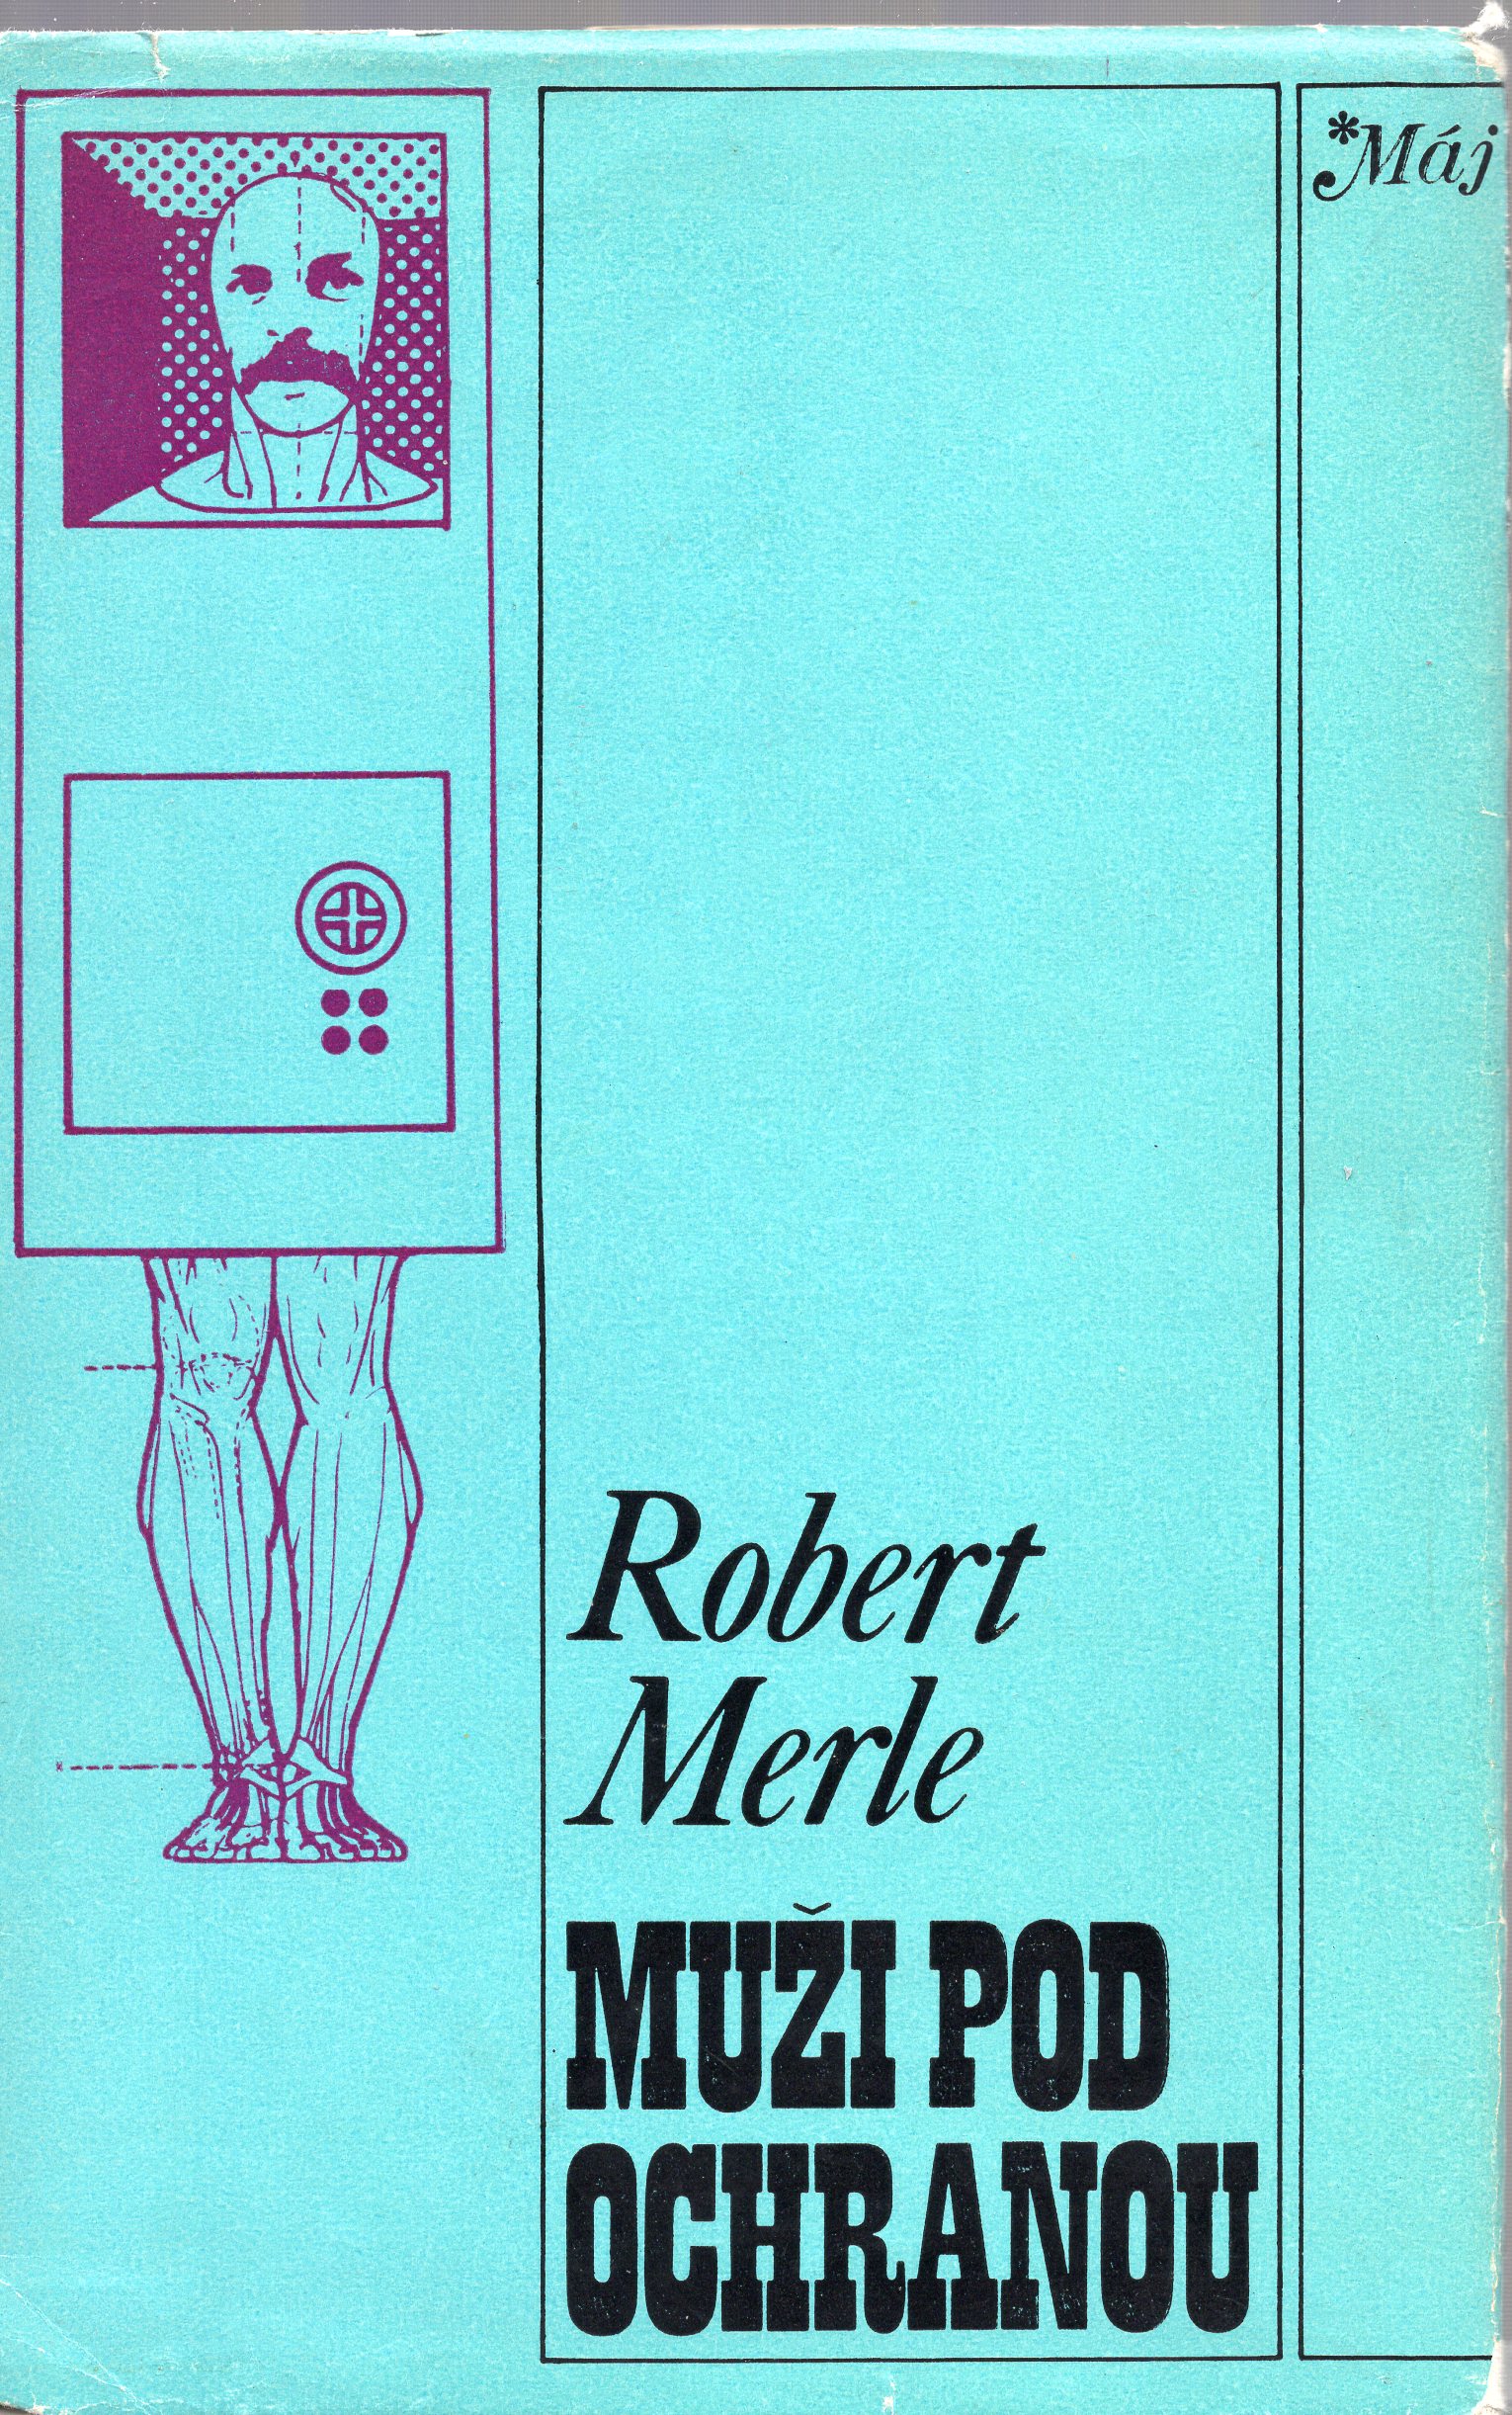 A - Muži pod ochranou (Smena 1977) [Merle Robert]